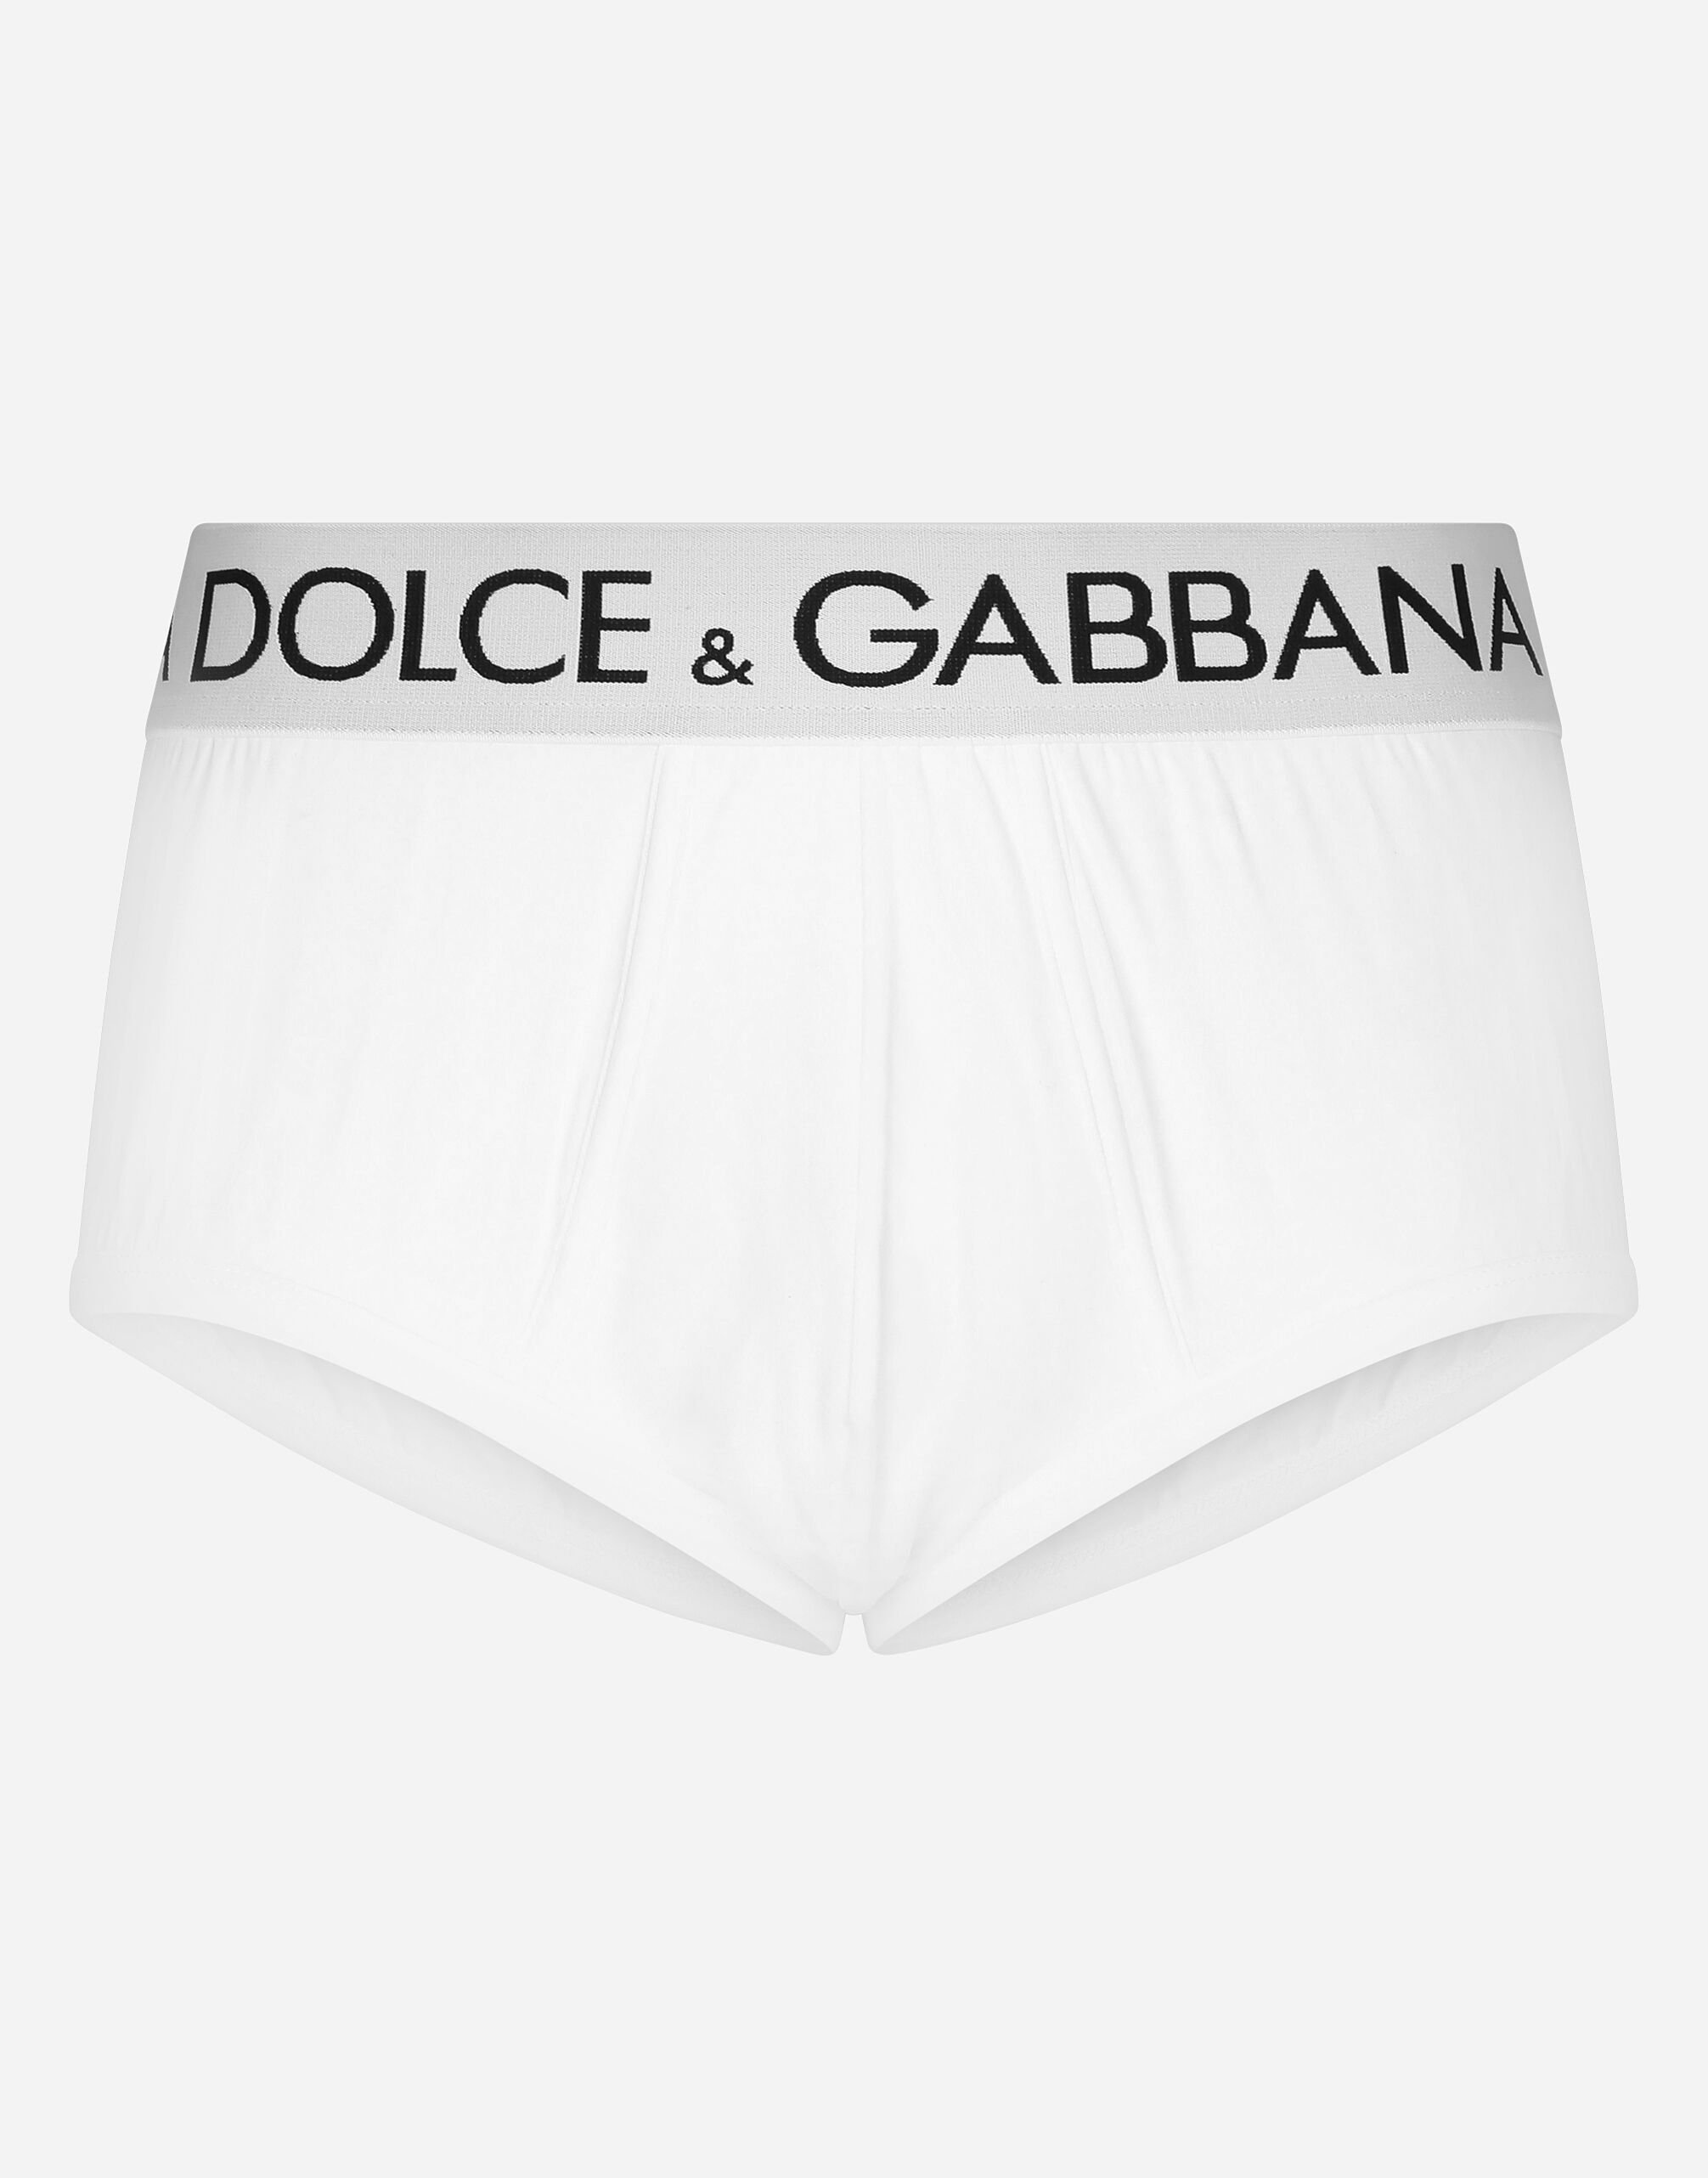 Dolce & Gabbana High-rise two-way stretch jersey Brando briefs Grey M3D03JONN97